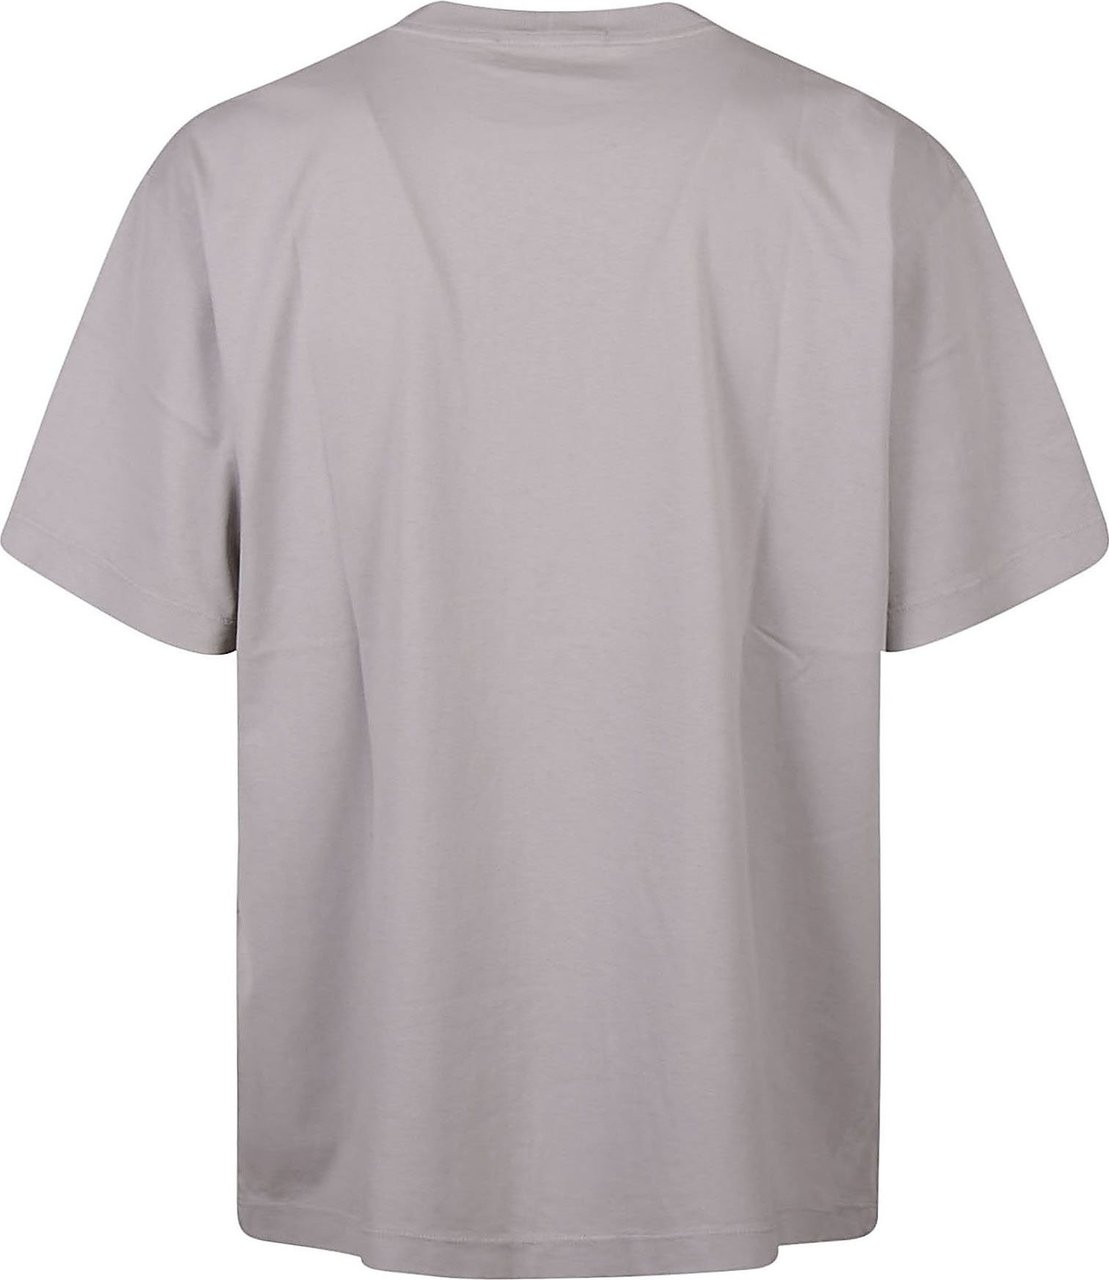 Stone Island T-shirt Grey Grijs